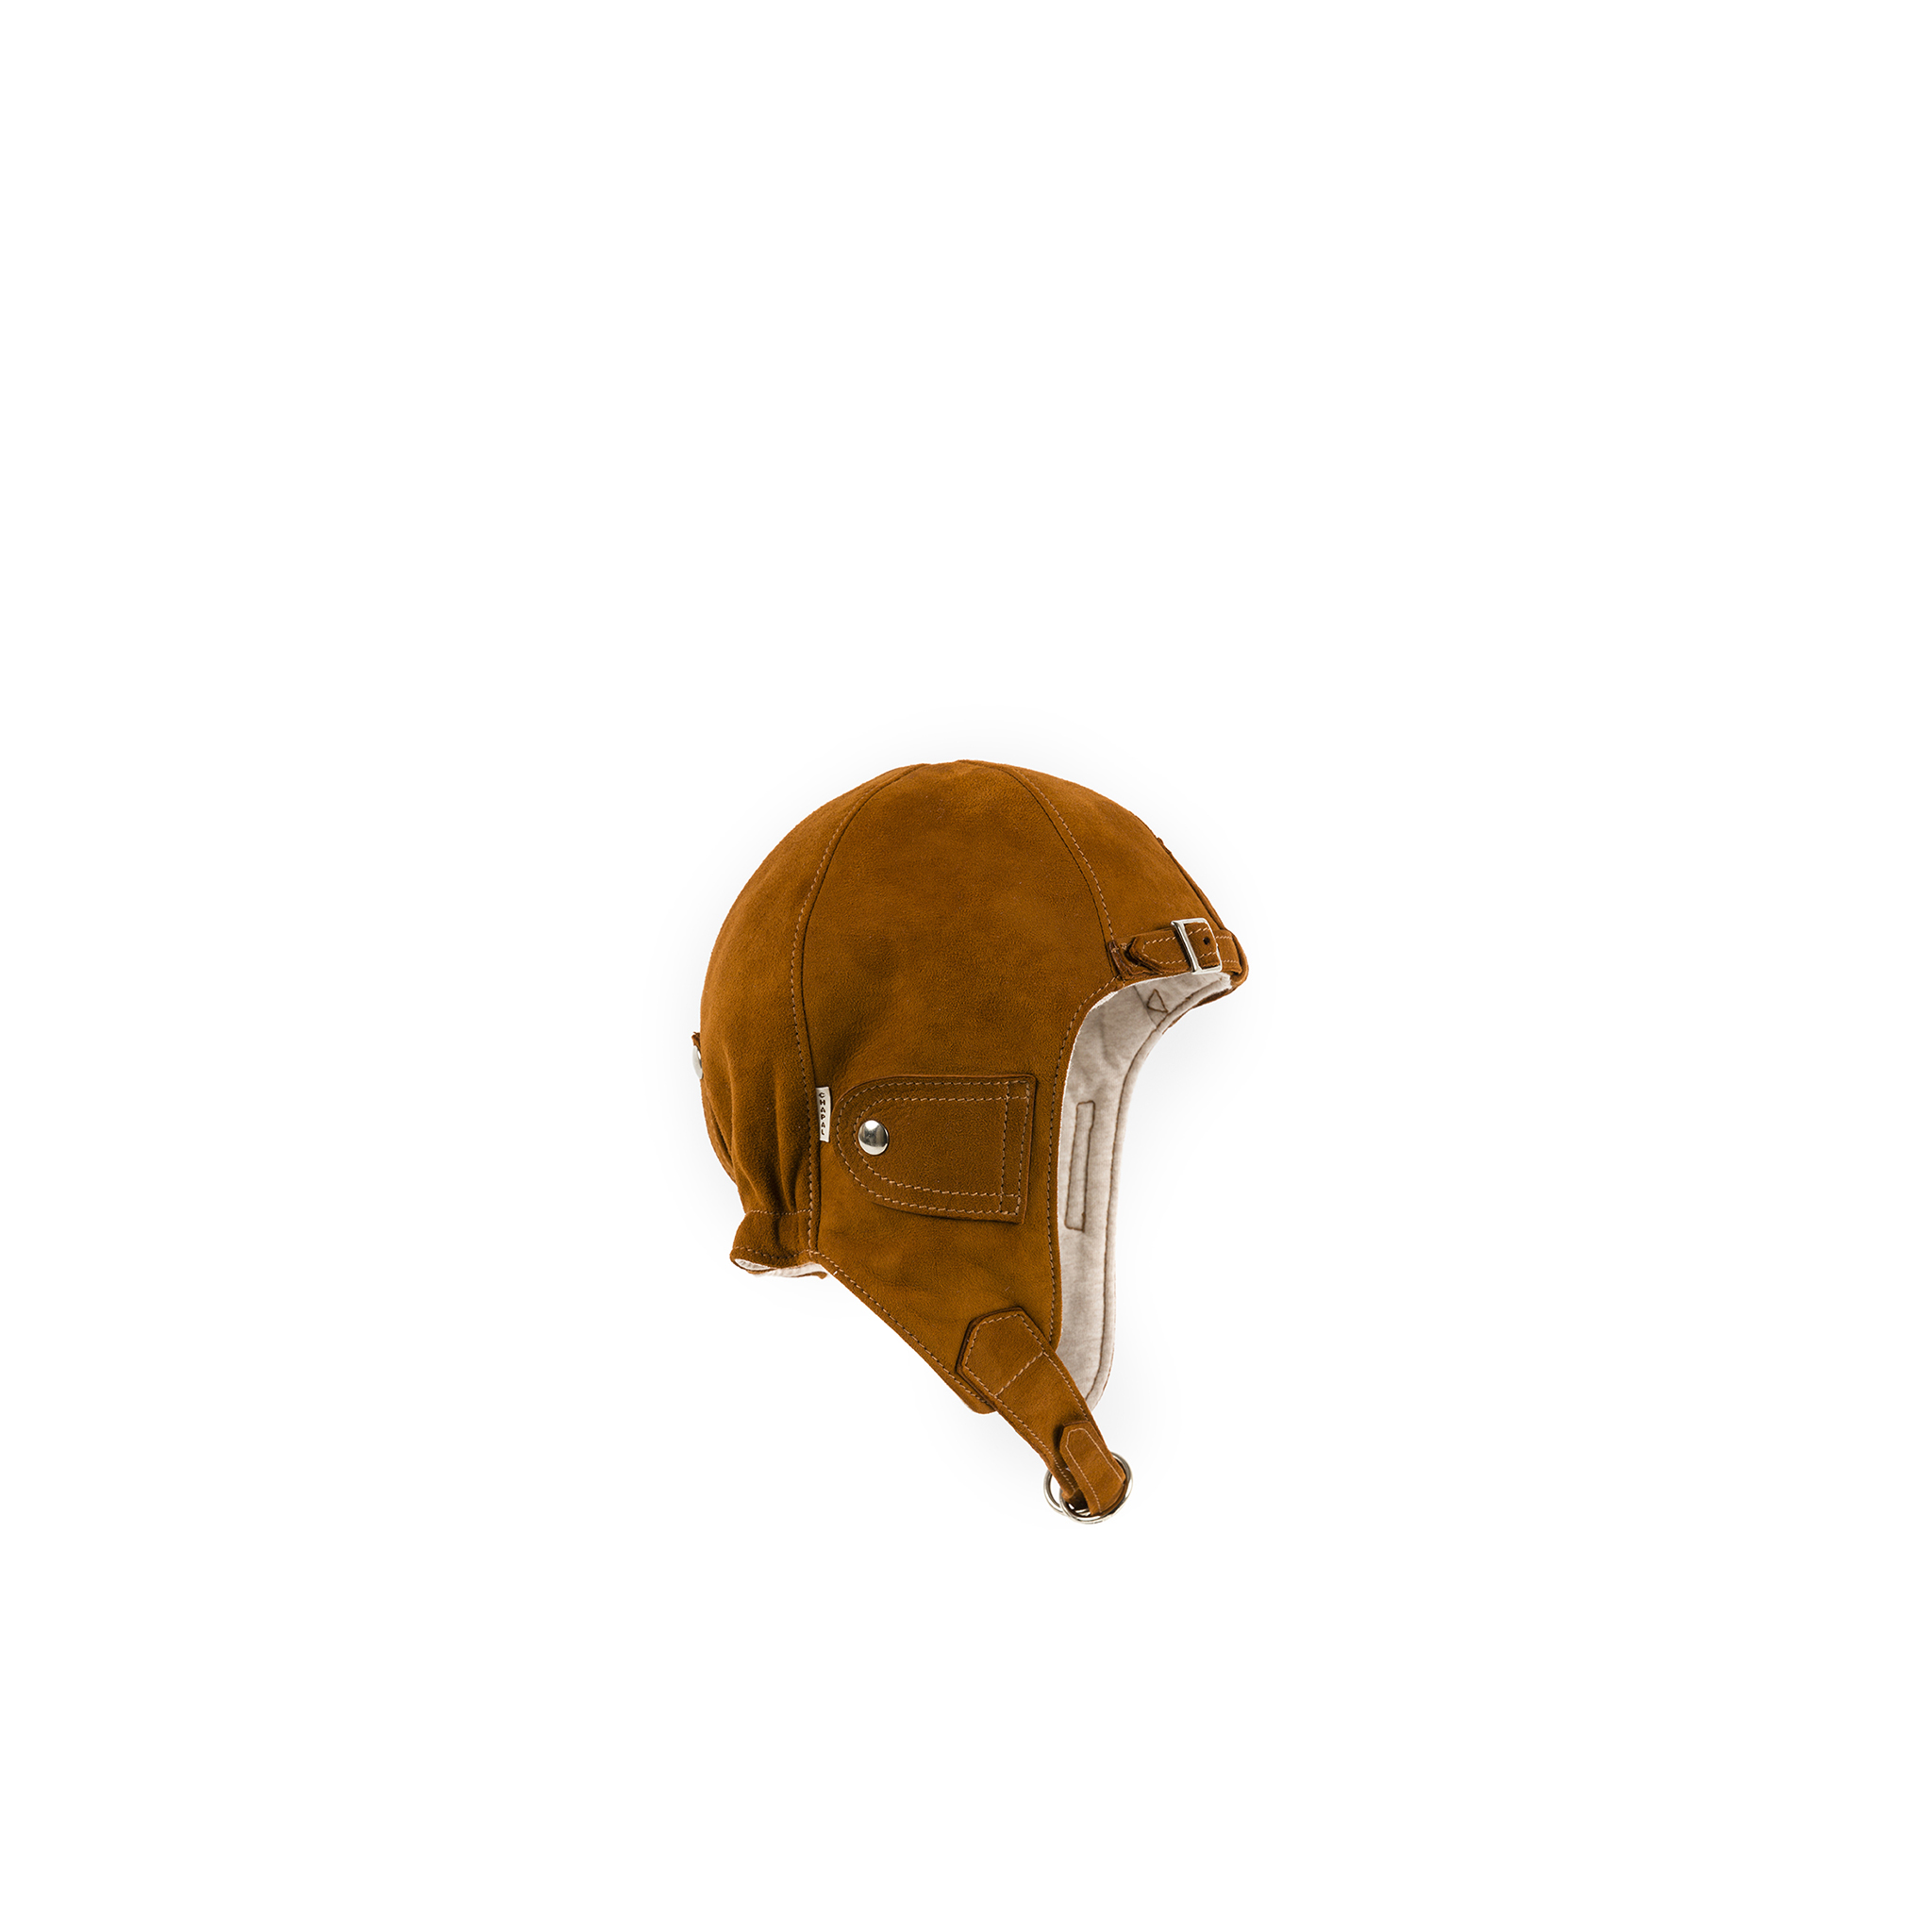 Driver Helmet - Suede leather - Suzy color